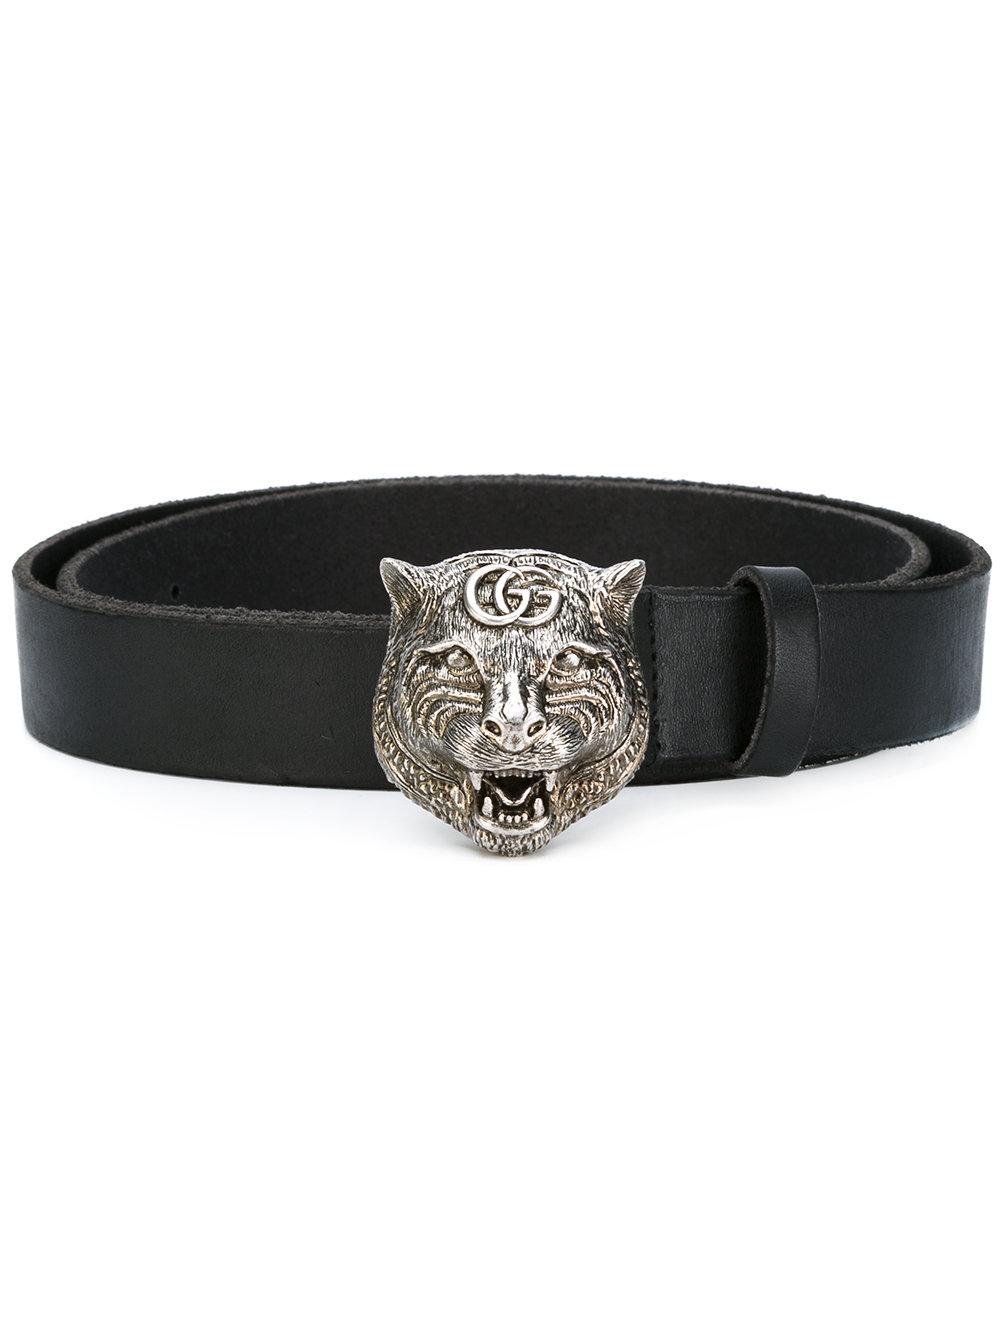 Lyst - Gucci Tiger&#39;s Head Belt in Black for Men